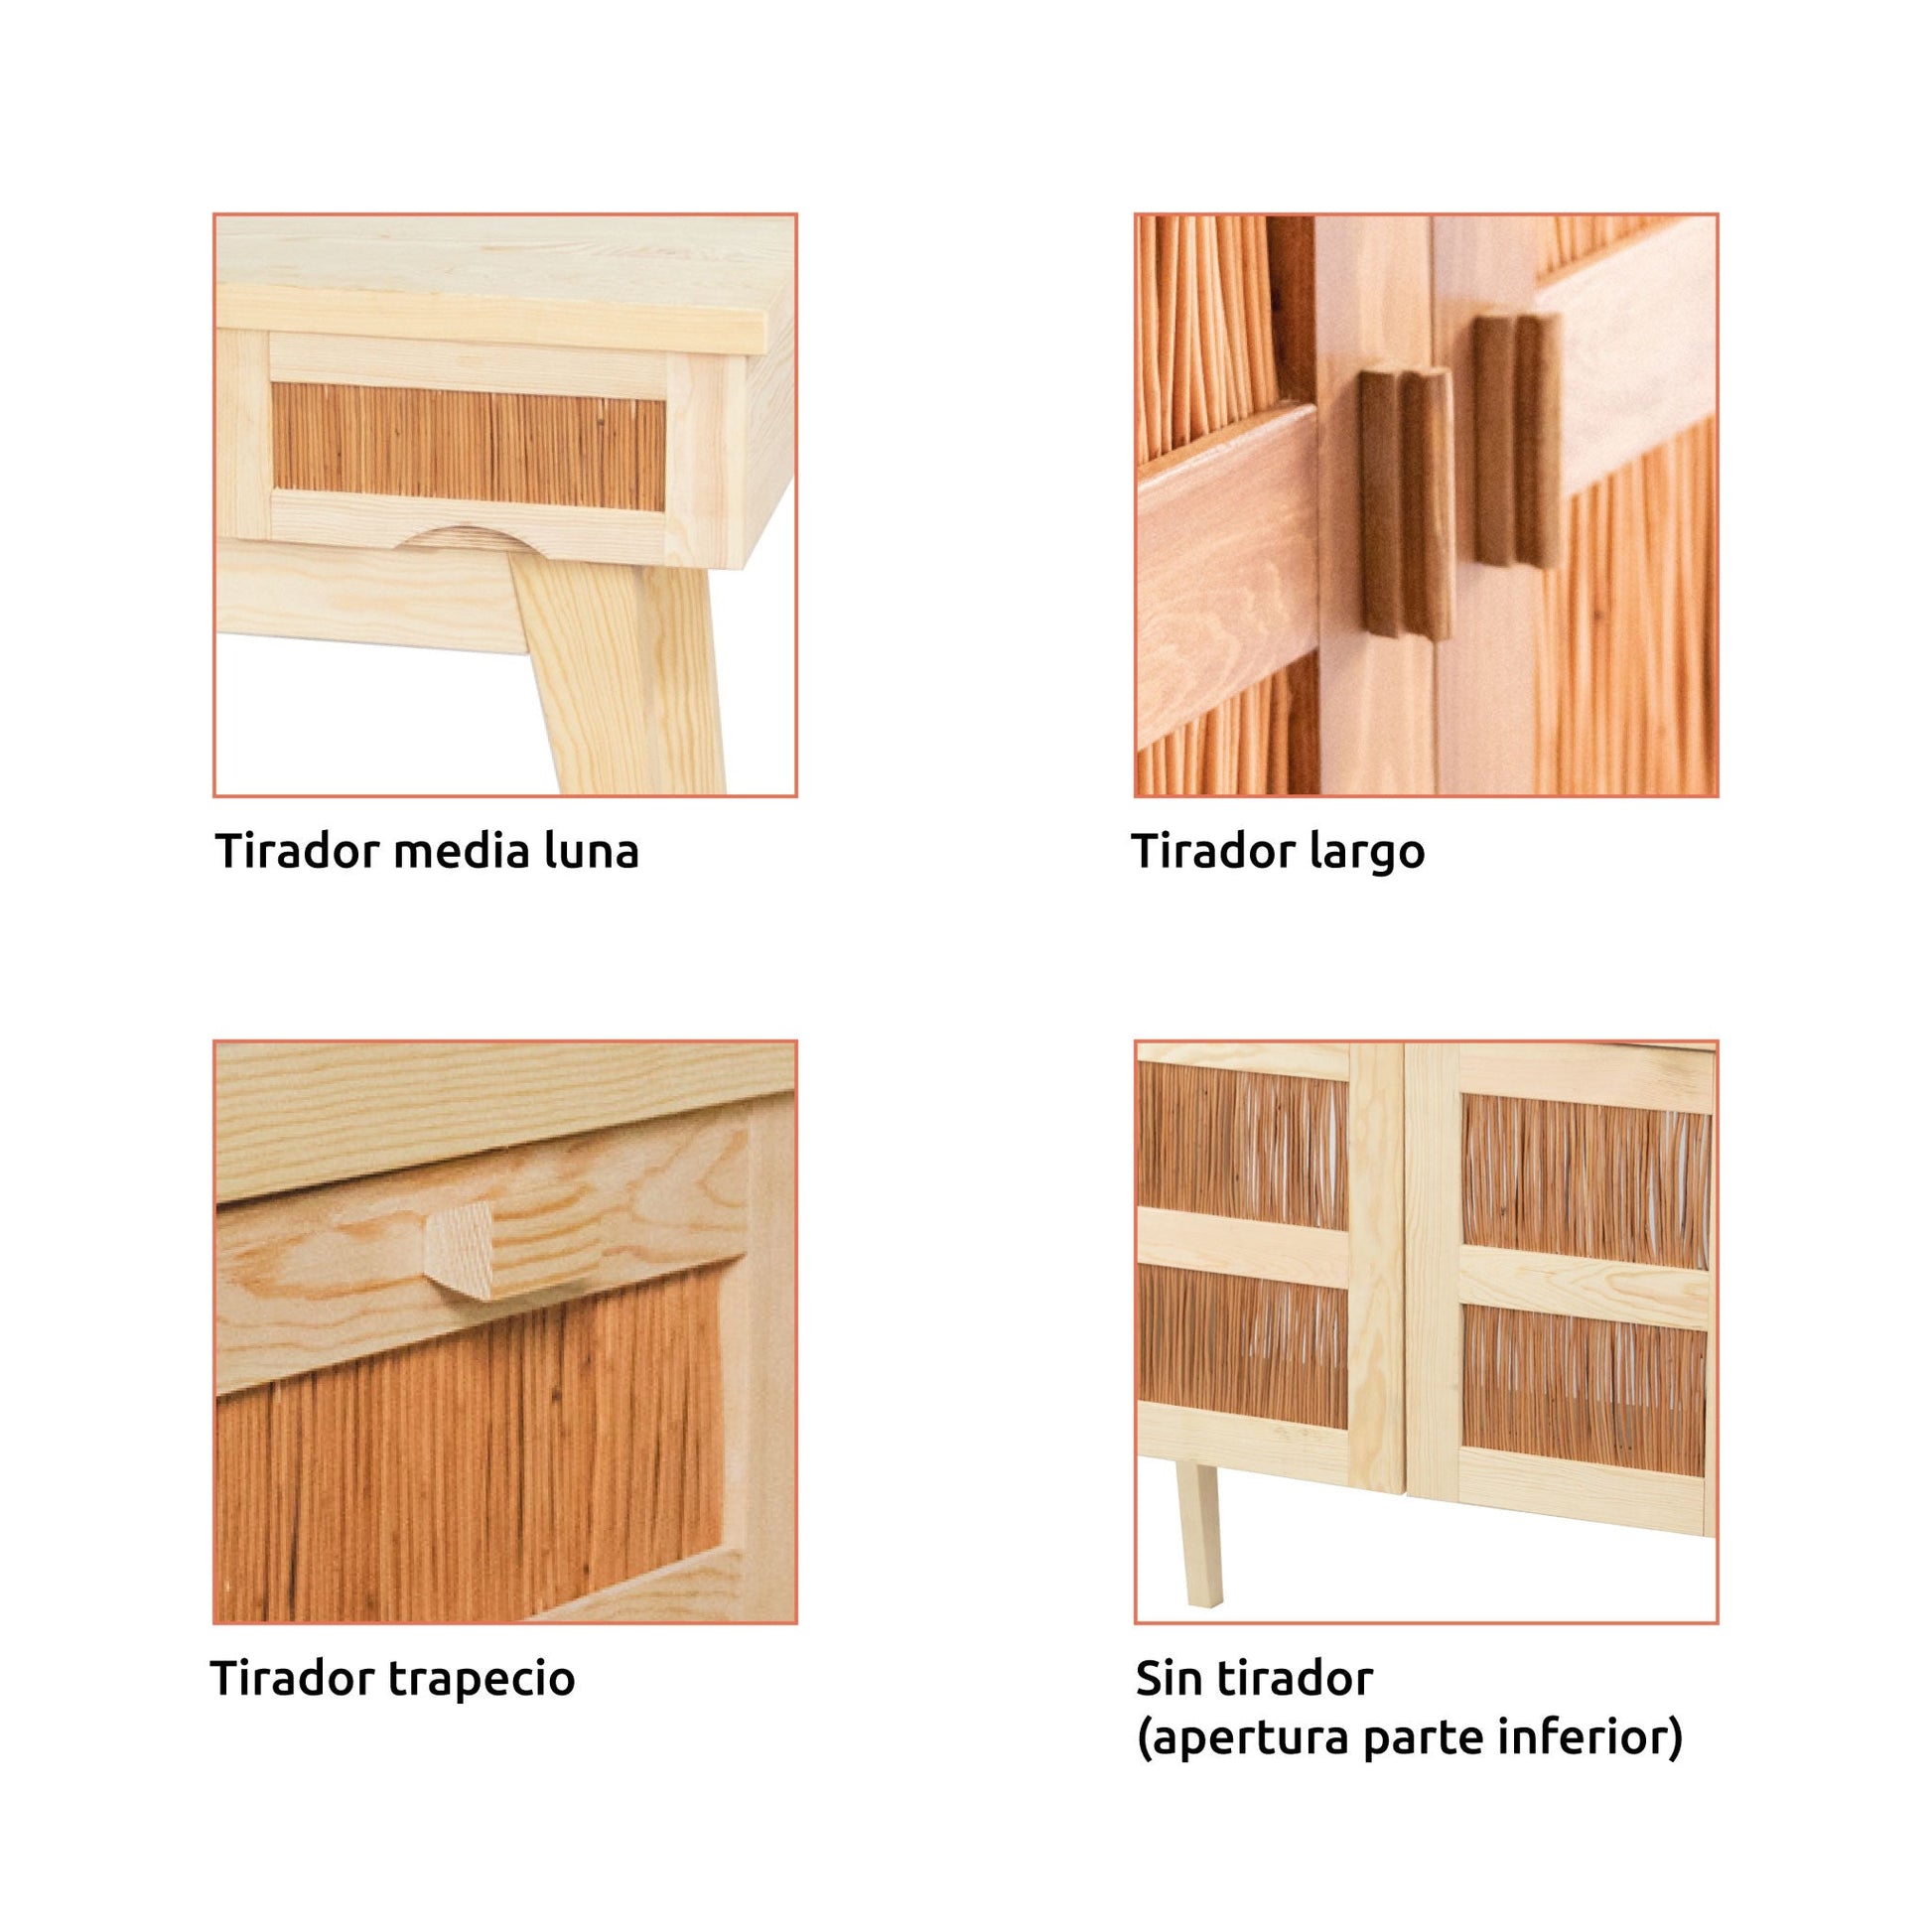 Tiradores de madera para muebles - ¡diferentes especies